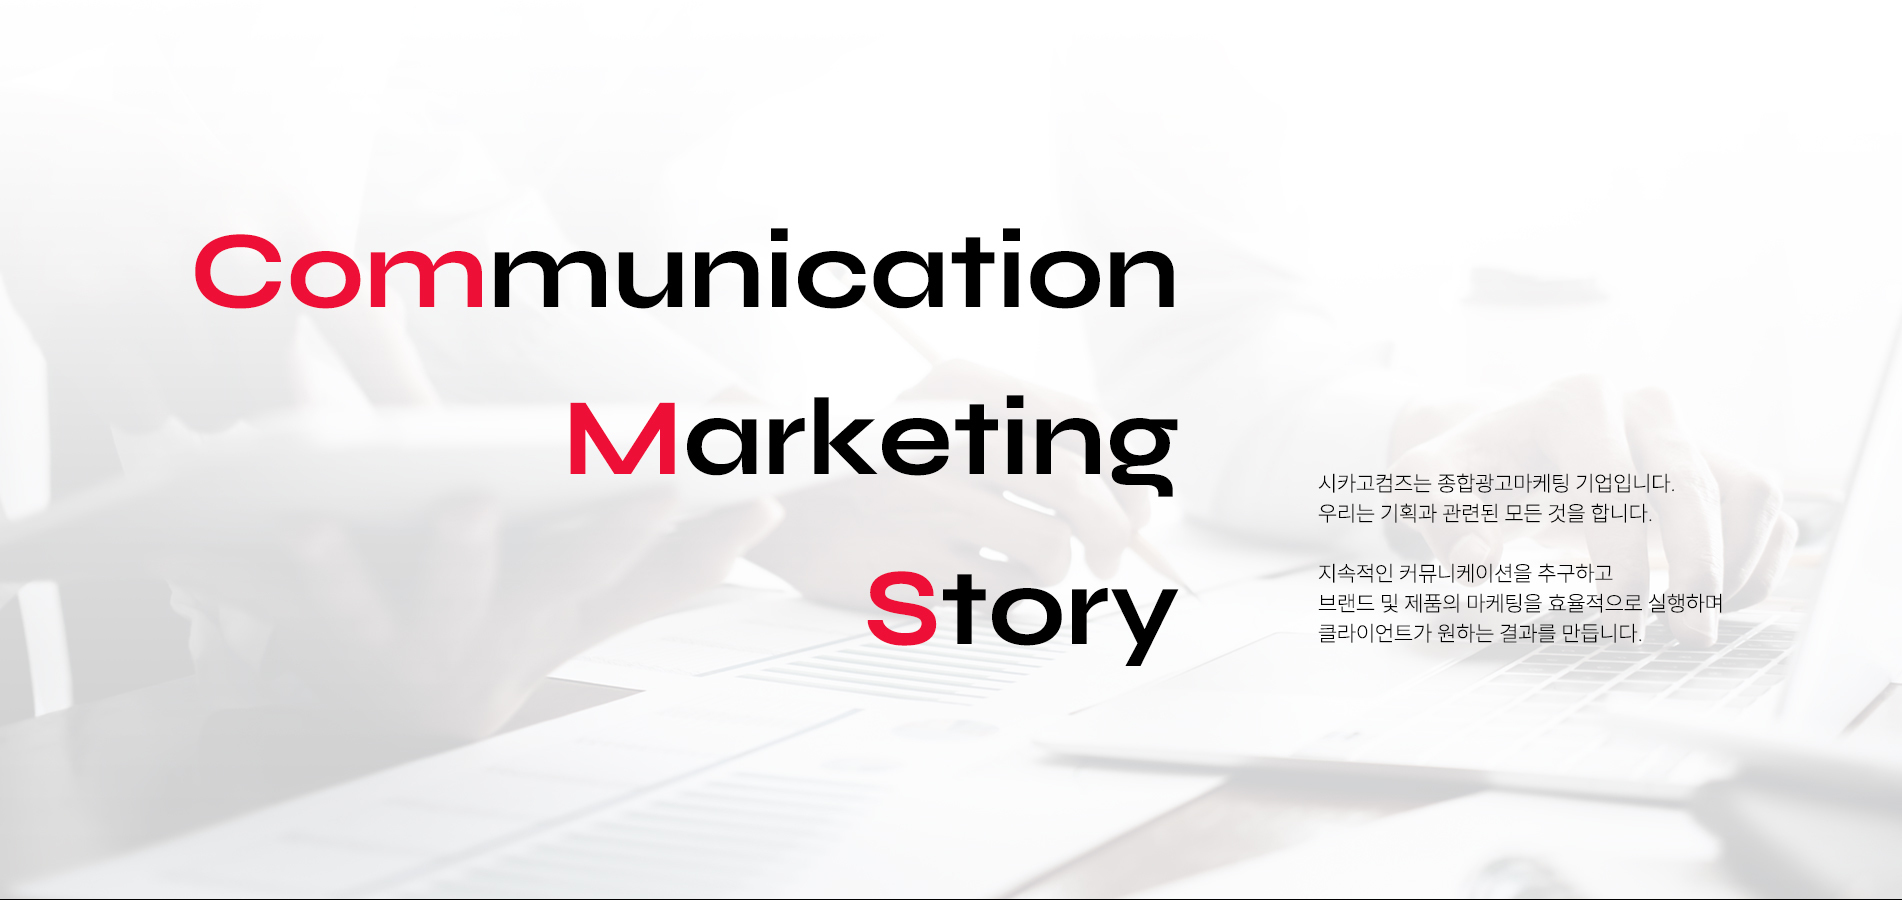 comunication, marketing, story. 시카고컴즈는 종합광고마케팅 기업입니다. 우리는 기획과 관련된 모든 것을 합니다. 지속적인 커뮤니케이션을 추구하고 브랜드 및 제품의 마케팅을 효율적으로 실행하며 클라이언트가 원하는 결과를 만듭니다.